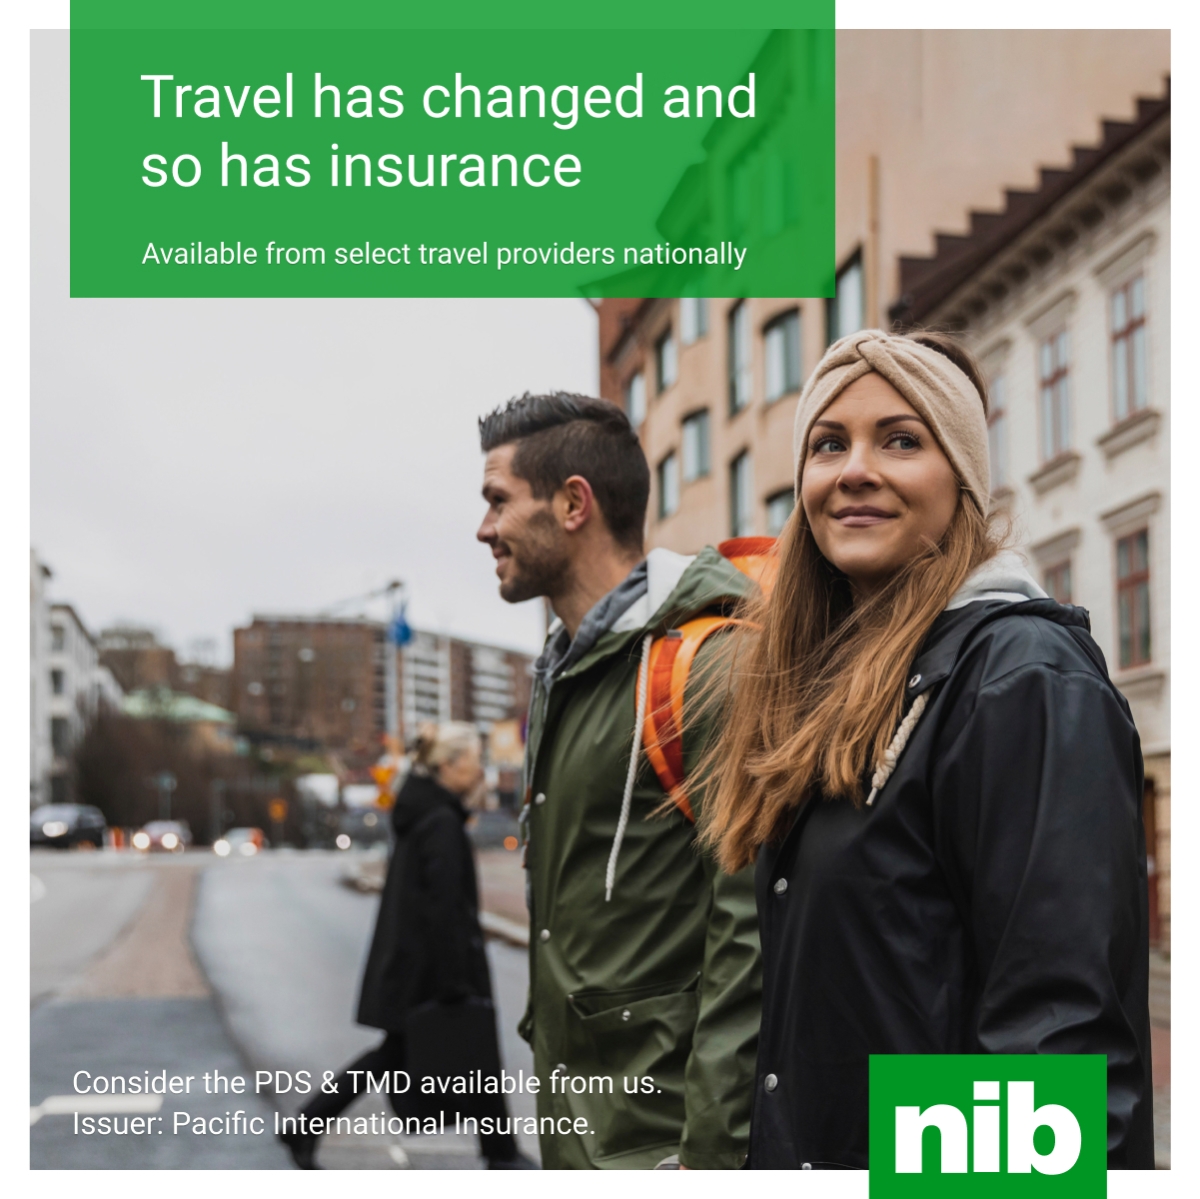 nib travel insurance schedule of benefits